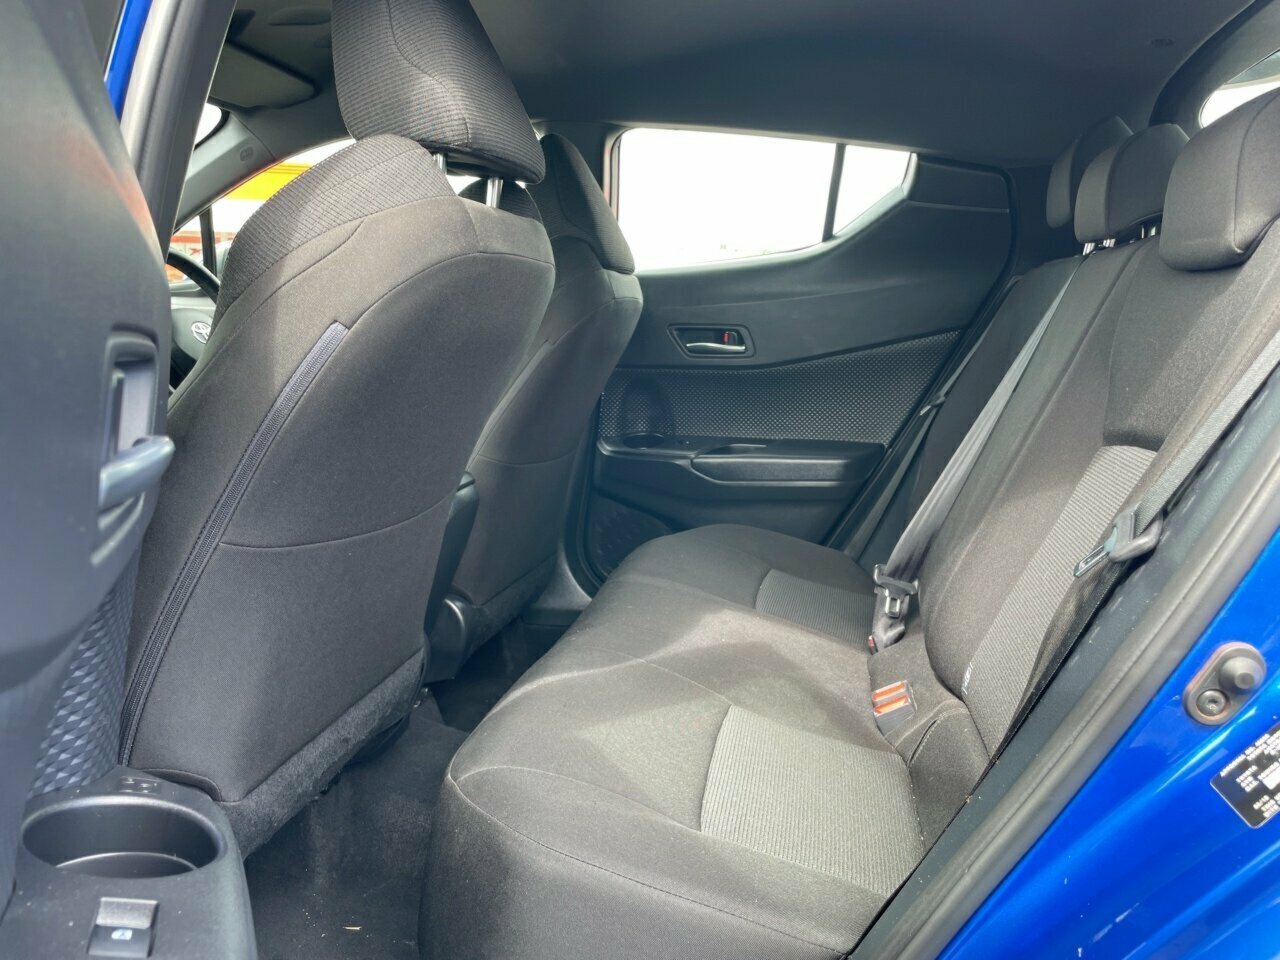 2019 Toyota C-HR NGX10R S-CVT 2WD SUV Image 8